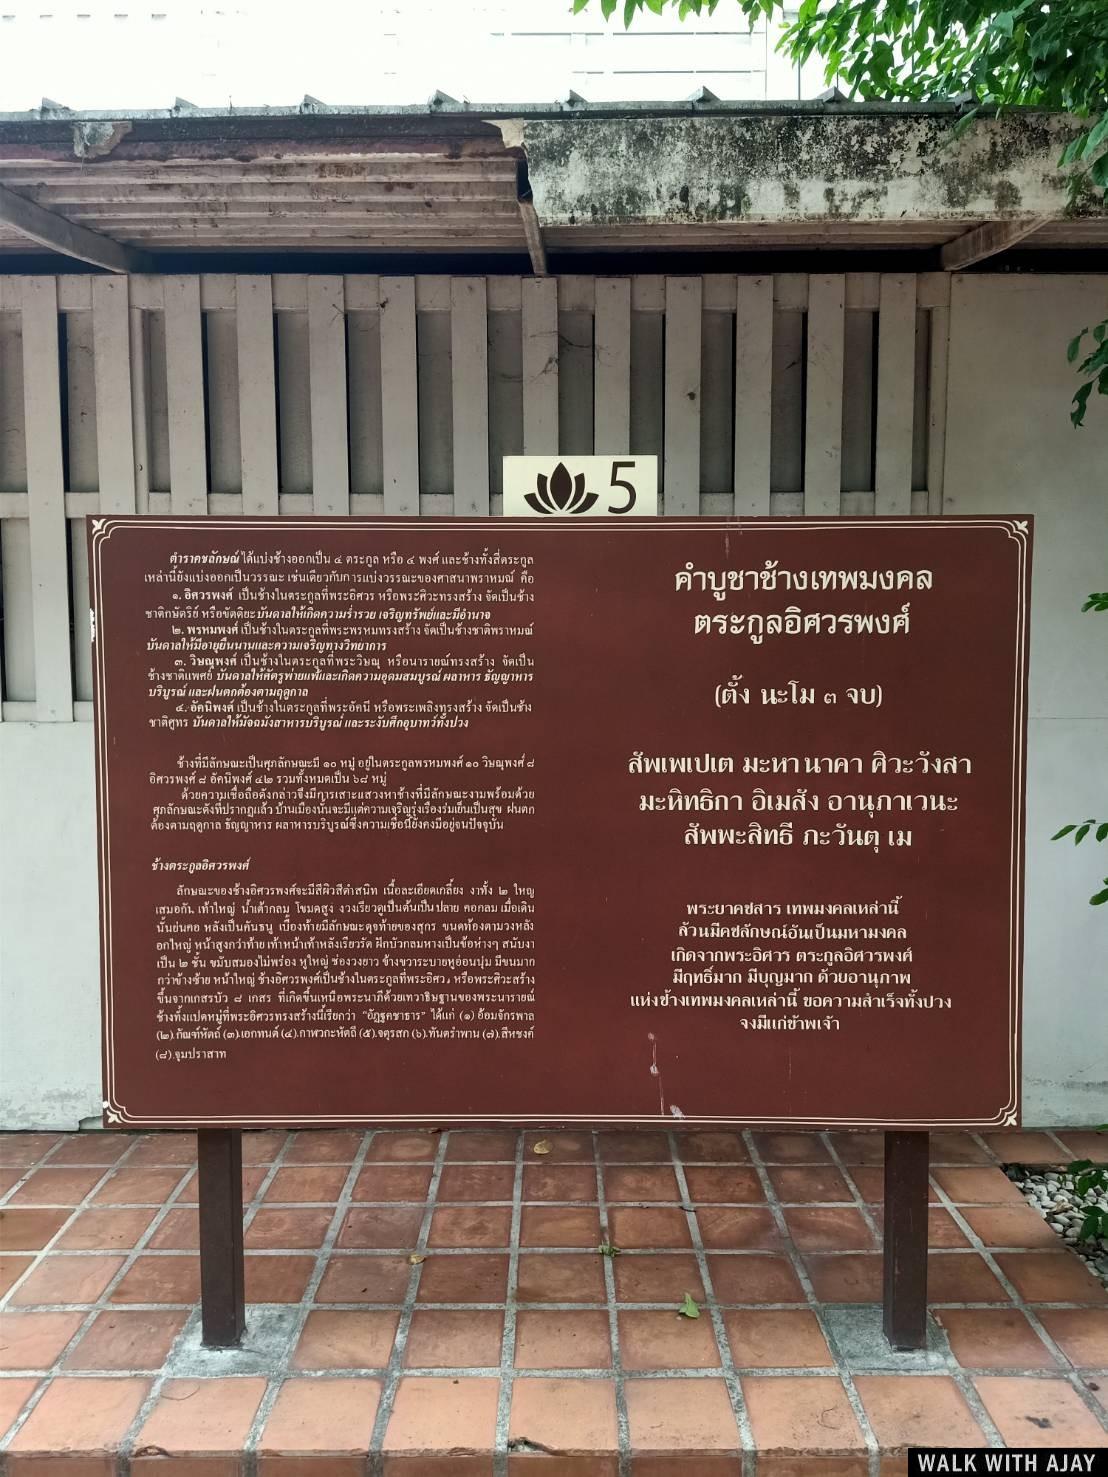 Our Half Day Trip To Erawan Museum (Giant Three-Headed Elephant) : Bangkok, Thailand (Jun’21) 7